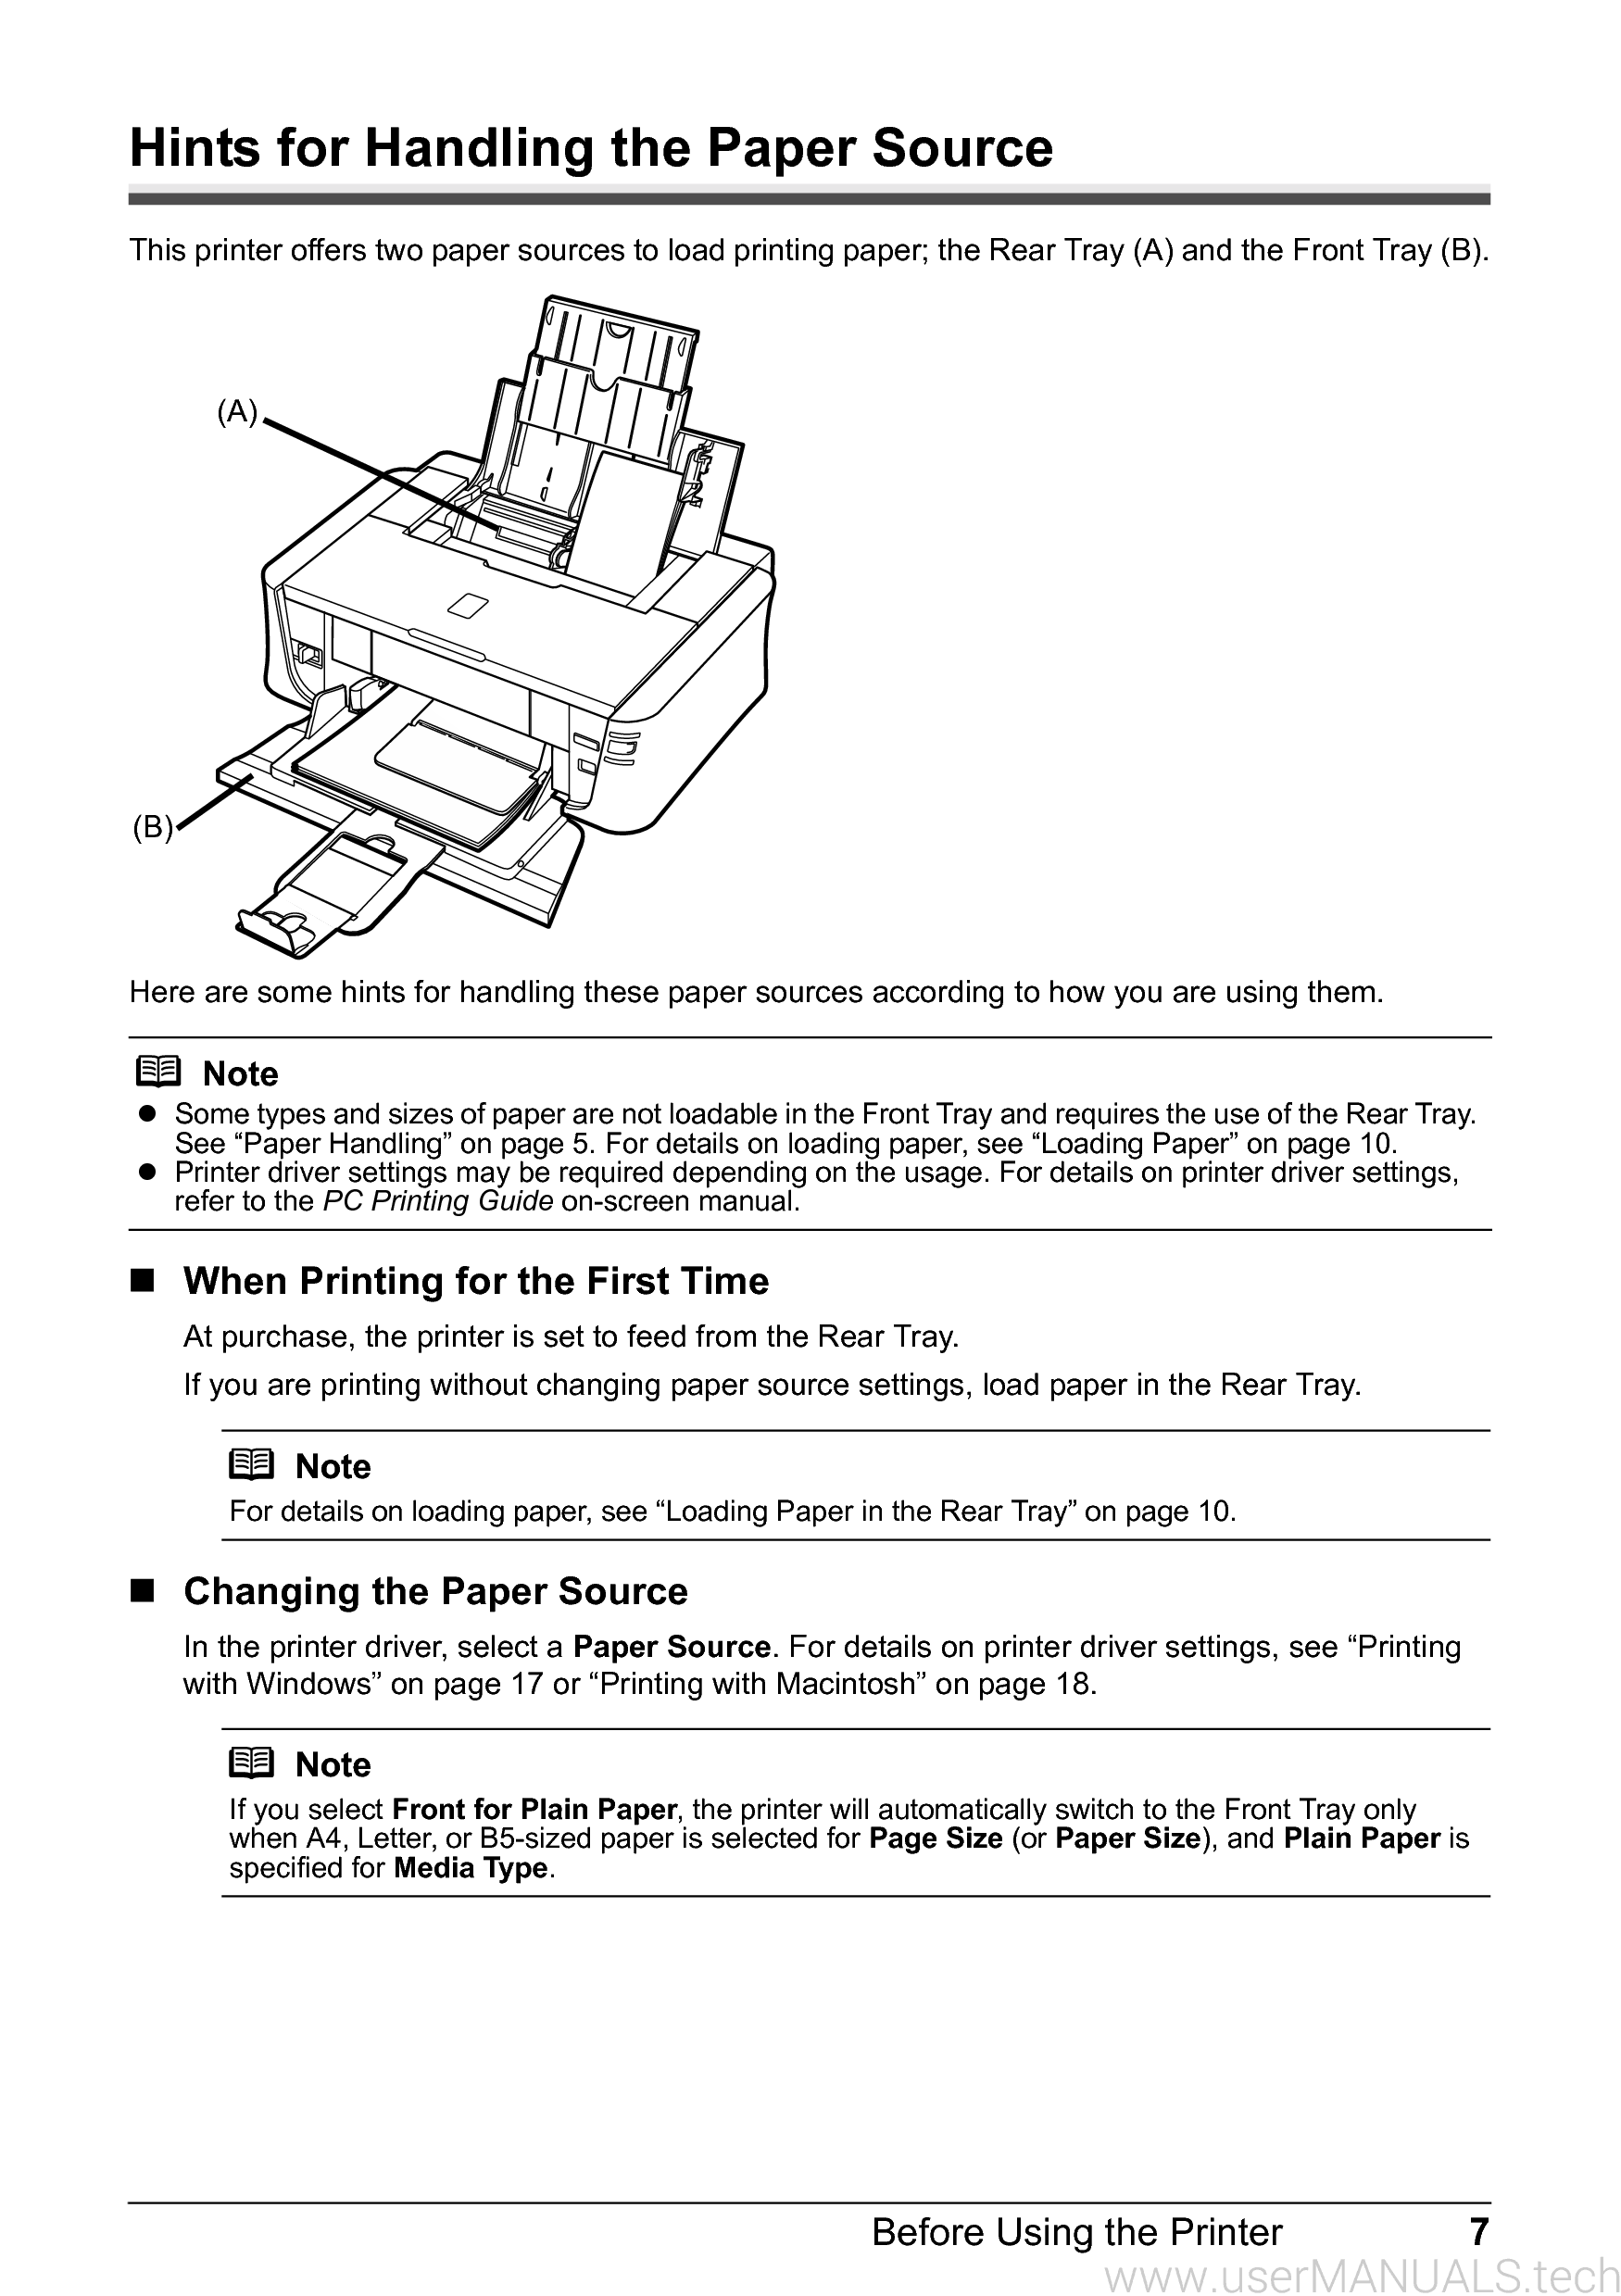 canon pixma ip2600 printer manual